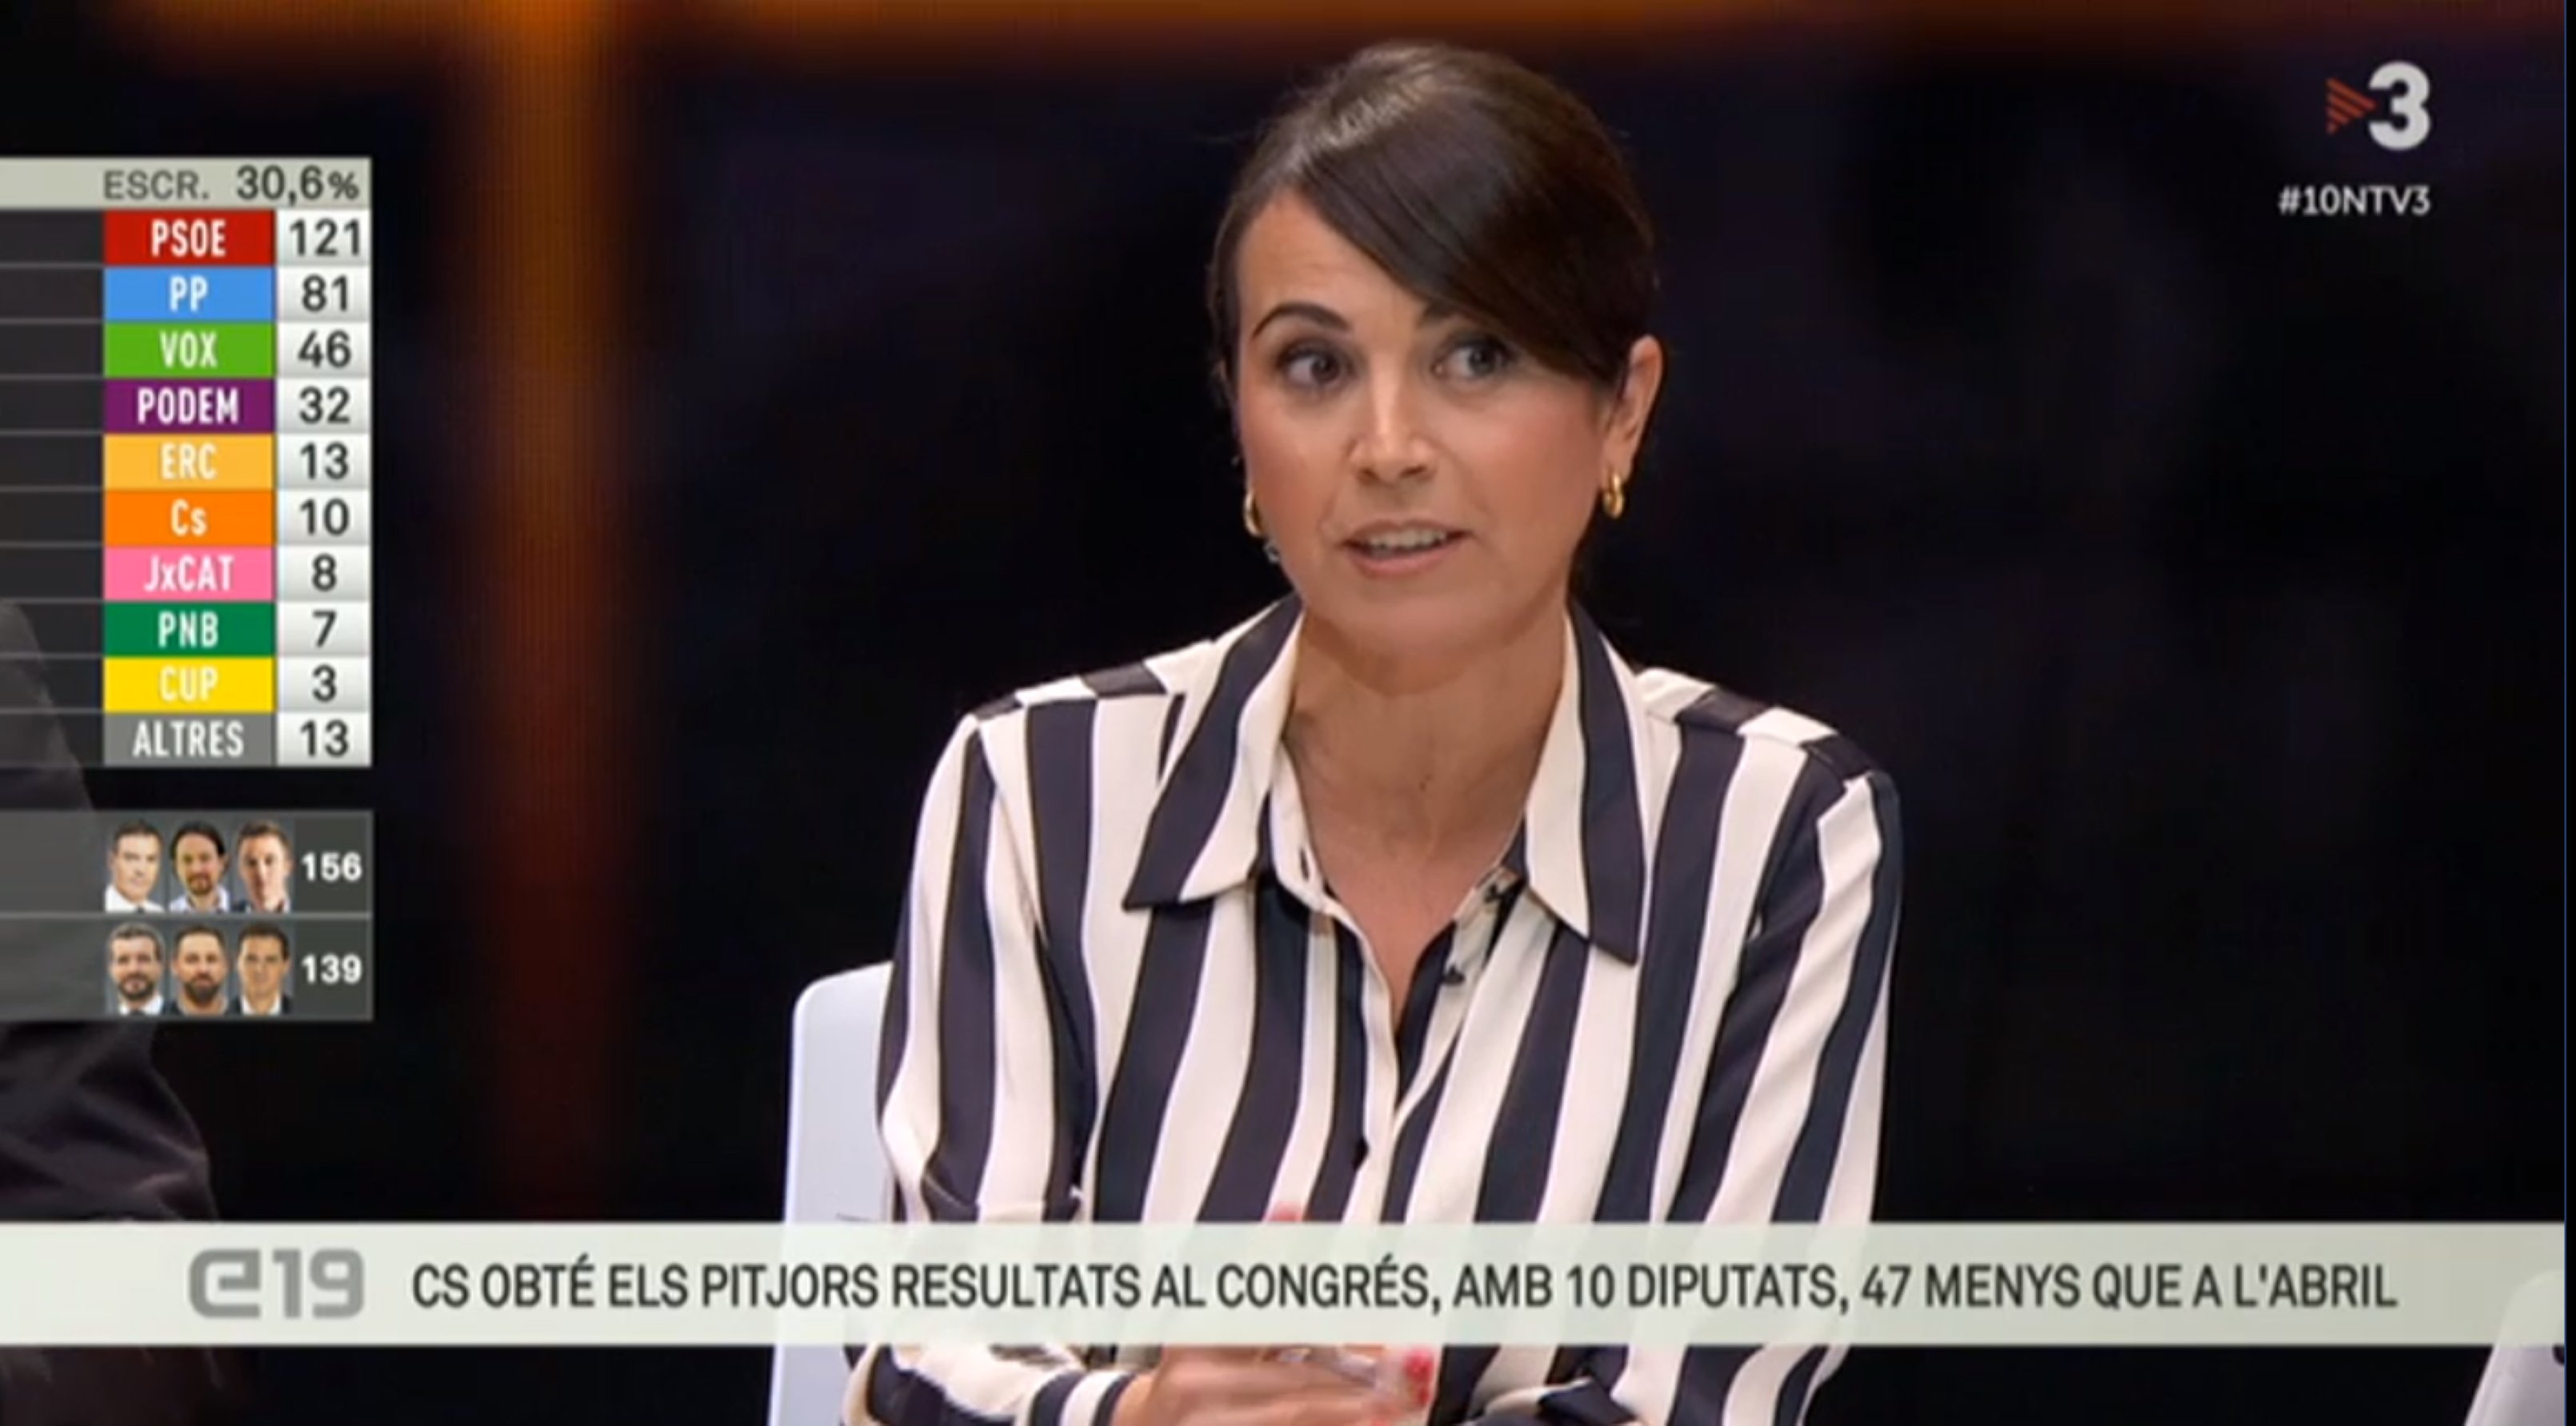 Lídia Heredia hunde a Albert Rivera en TV3: "Hasta luego, Lucas"